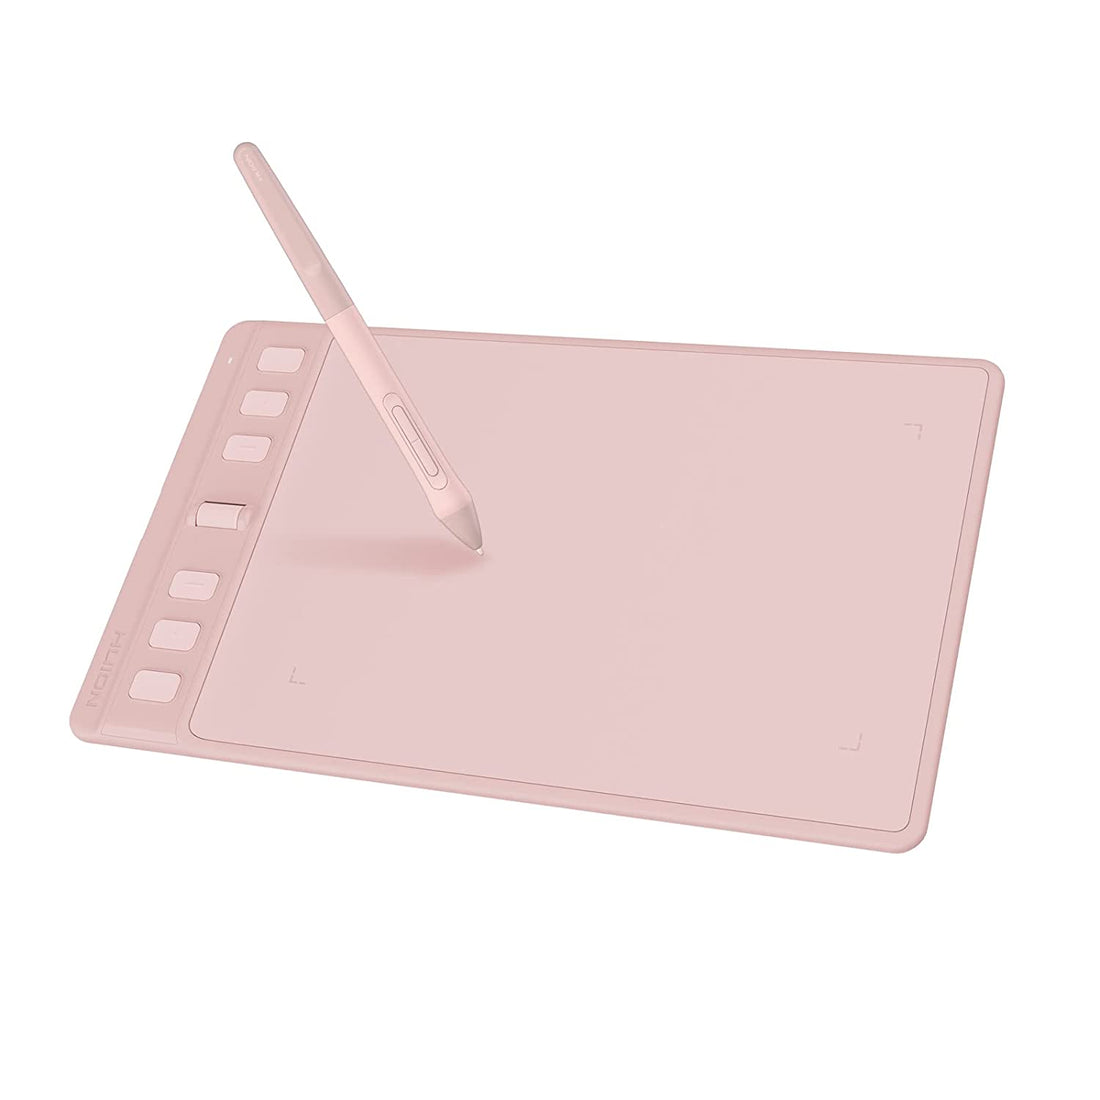 Huion Inspiroy 2 H641P - Small Digital Graphic Tablet (Sakura Pink)